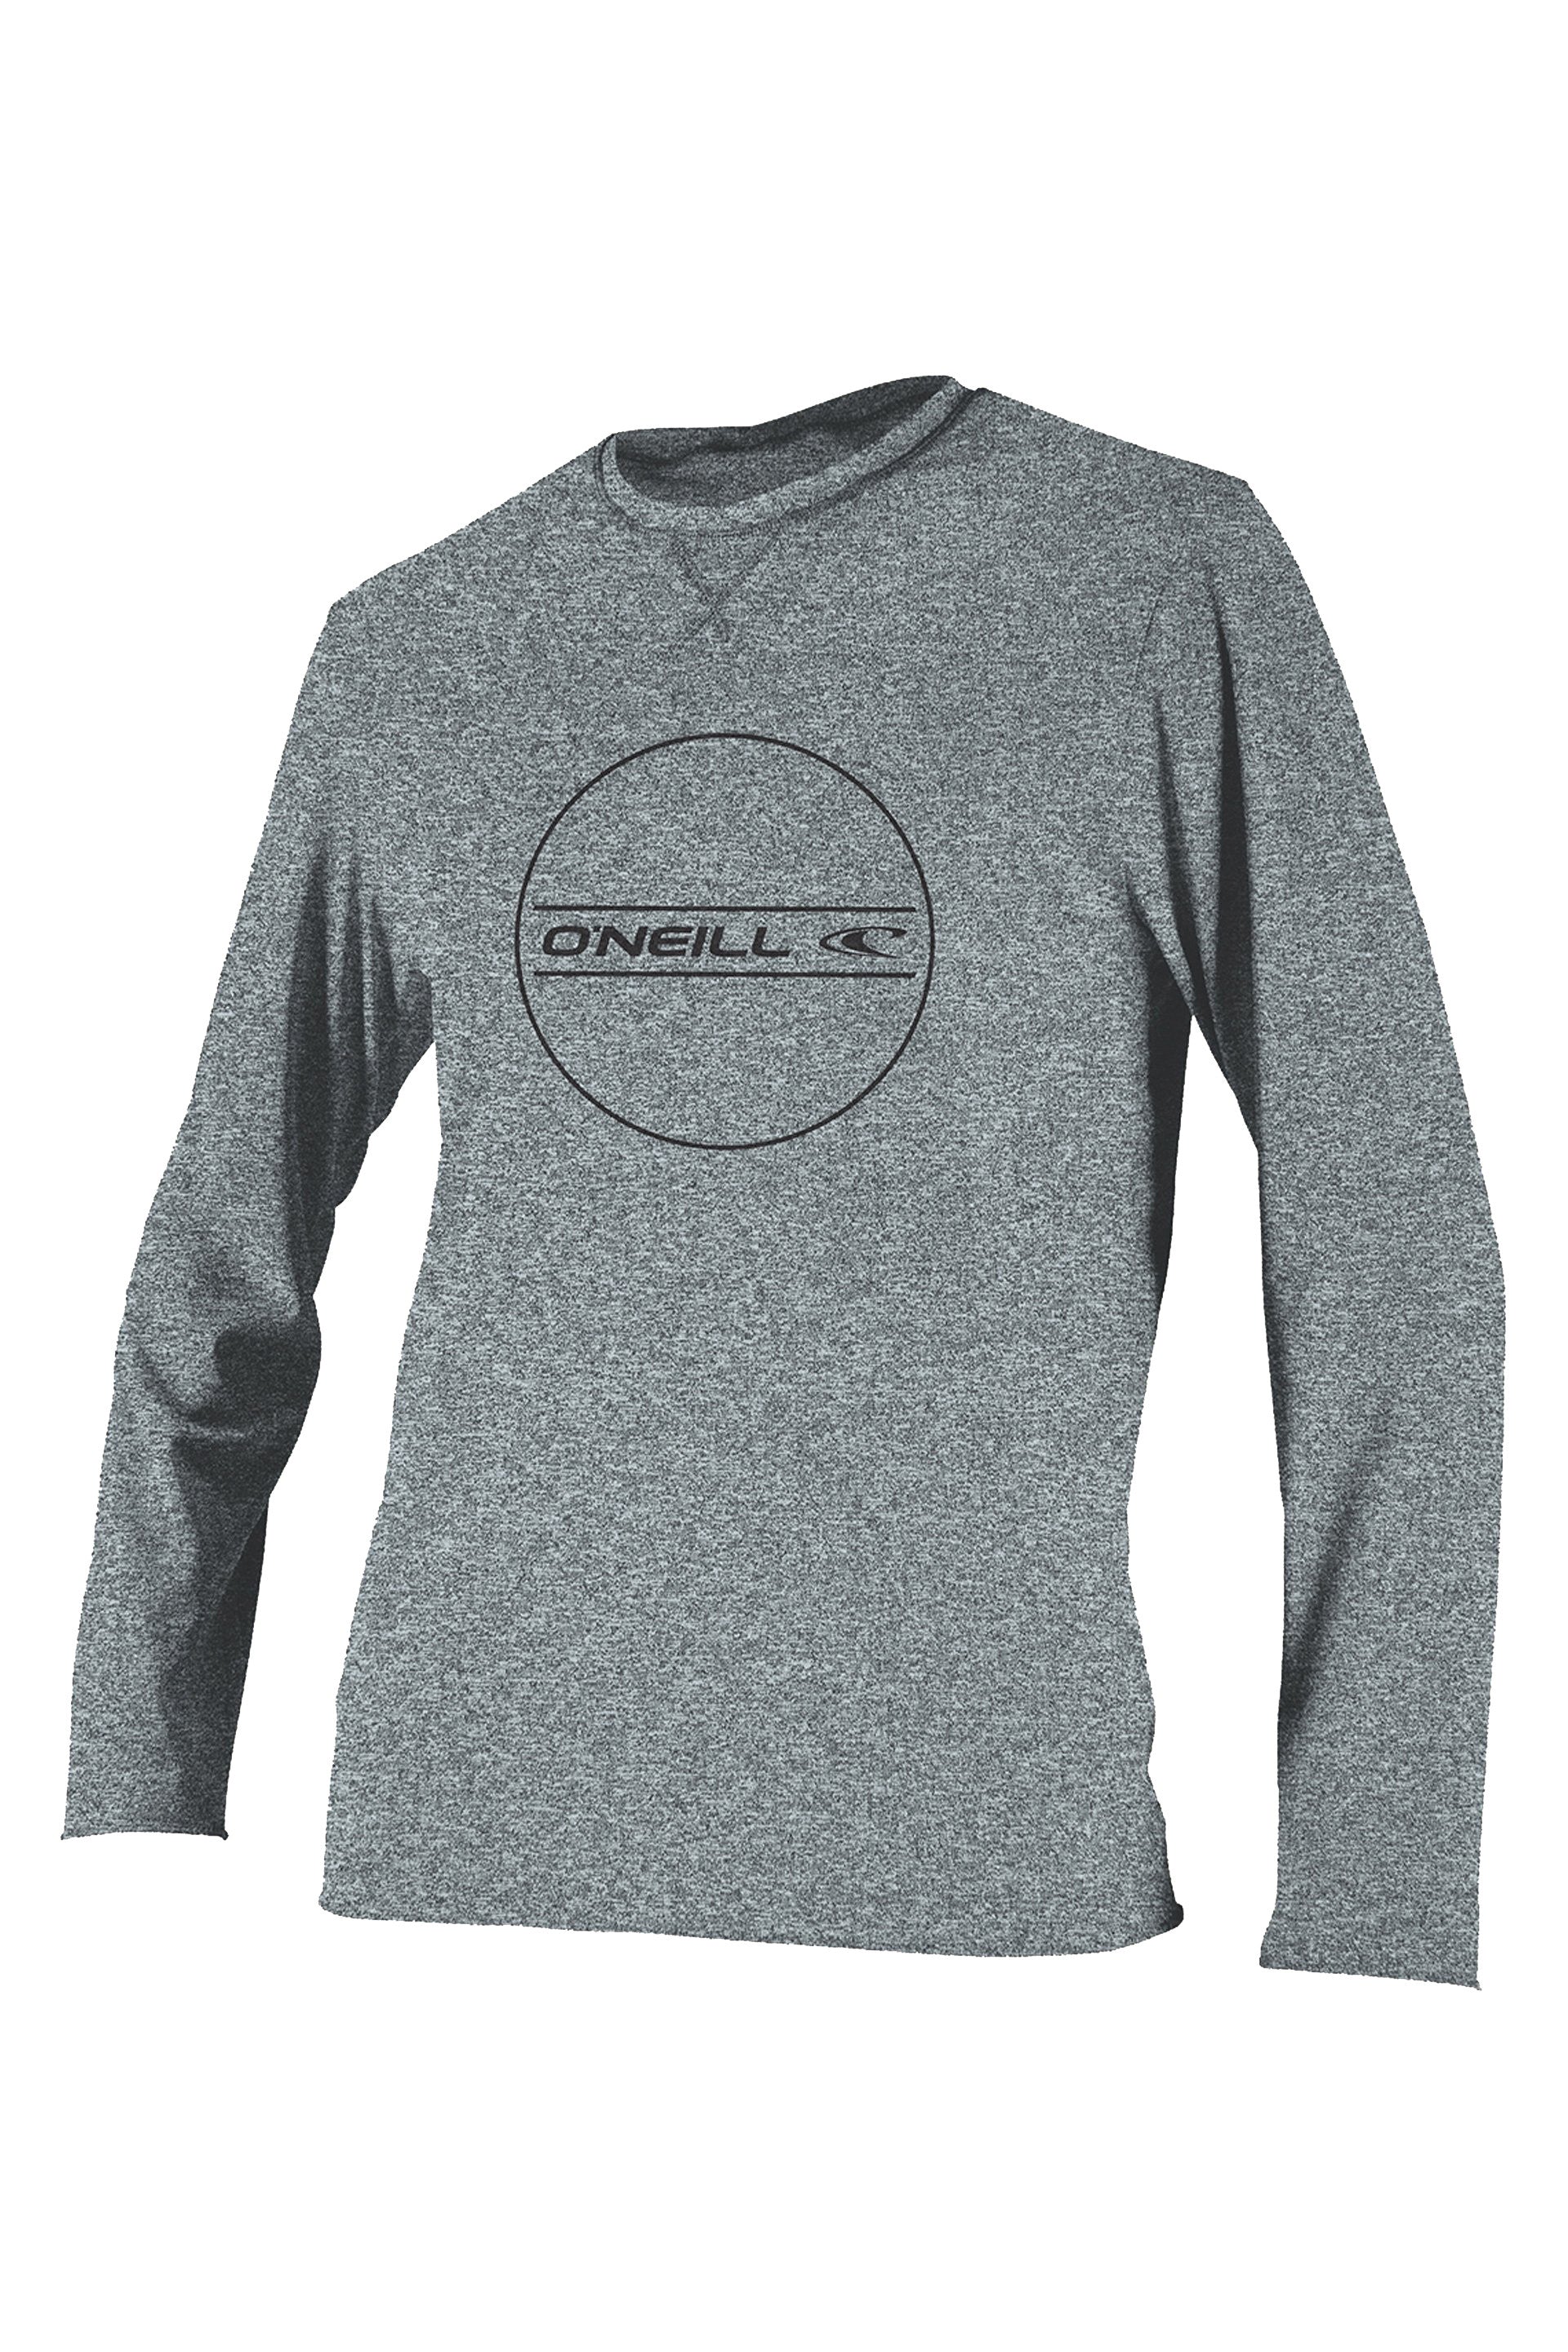 O'Neill Youth Hybrid LS Sun Shirt 271-Cool Grey 16